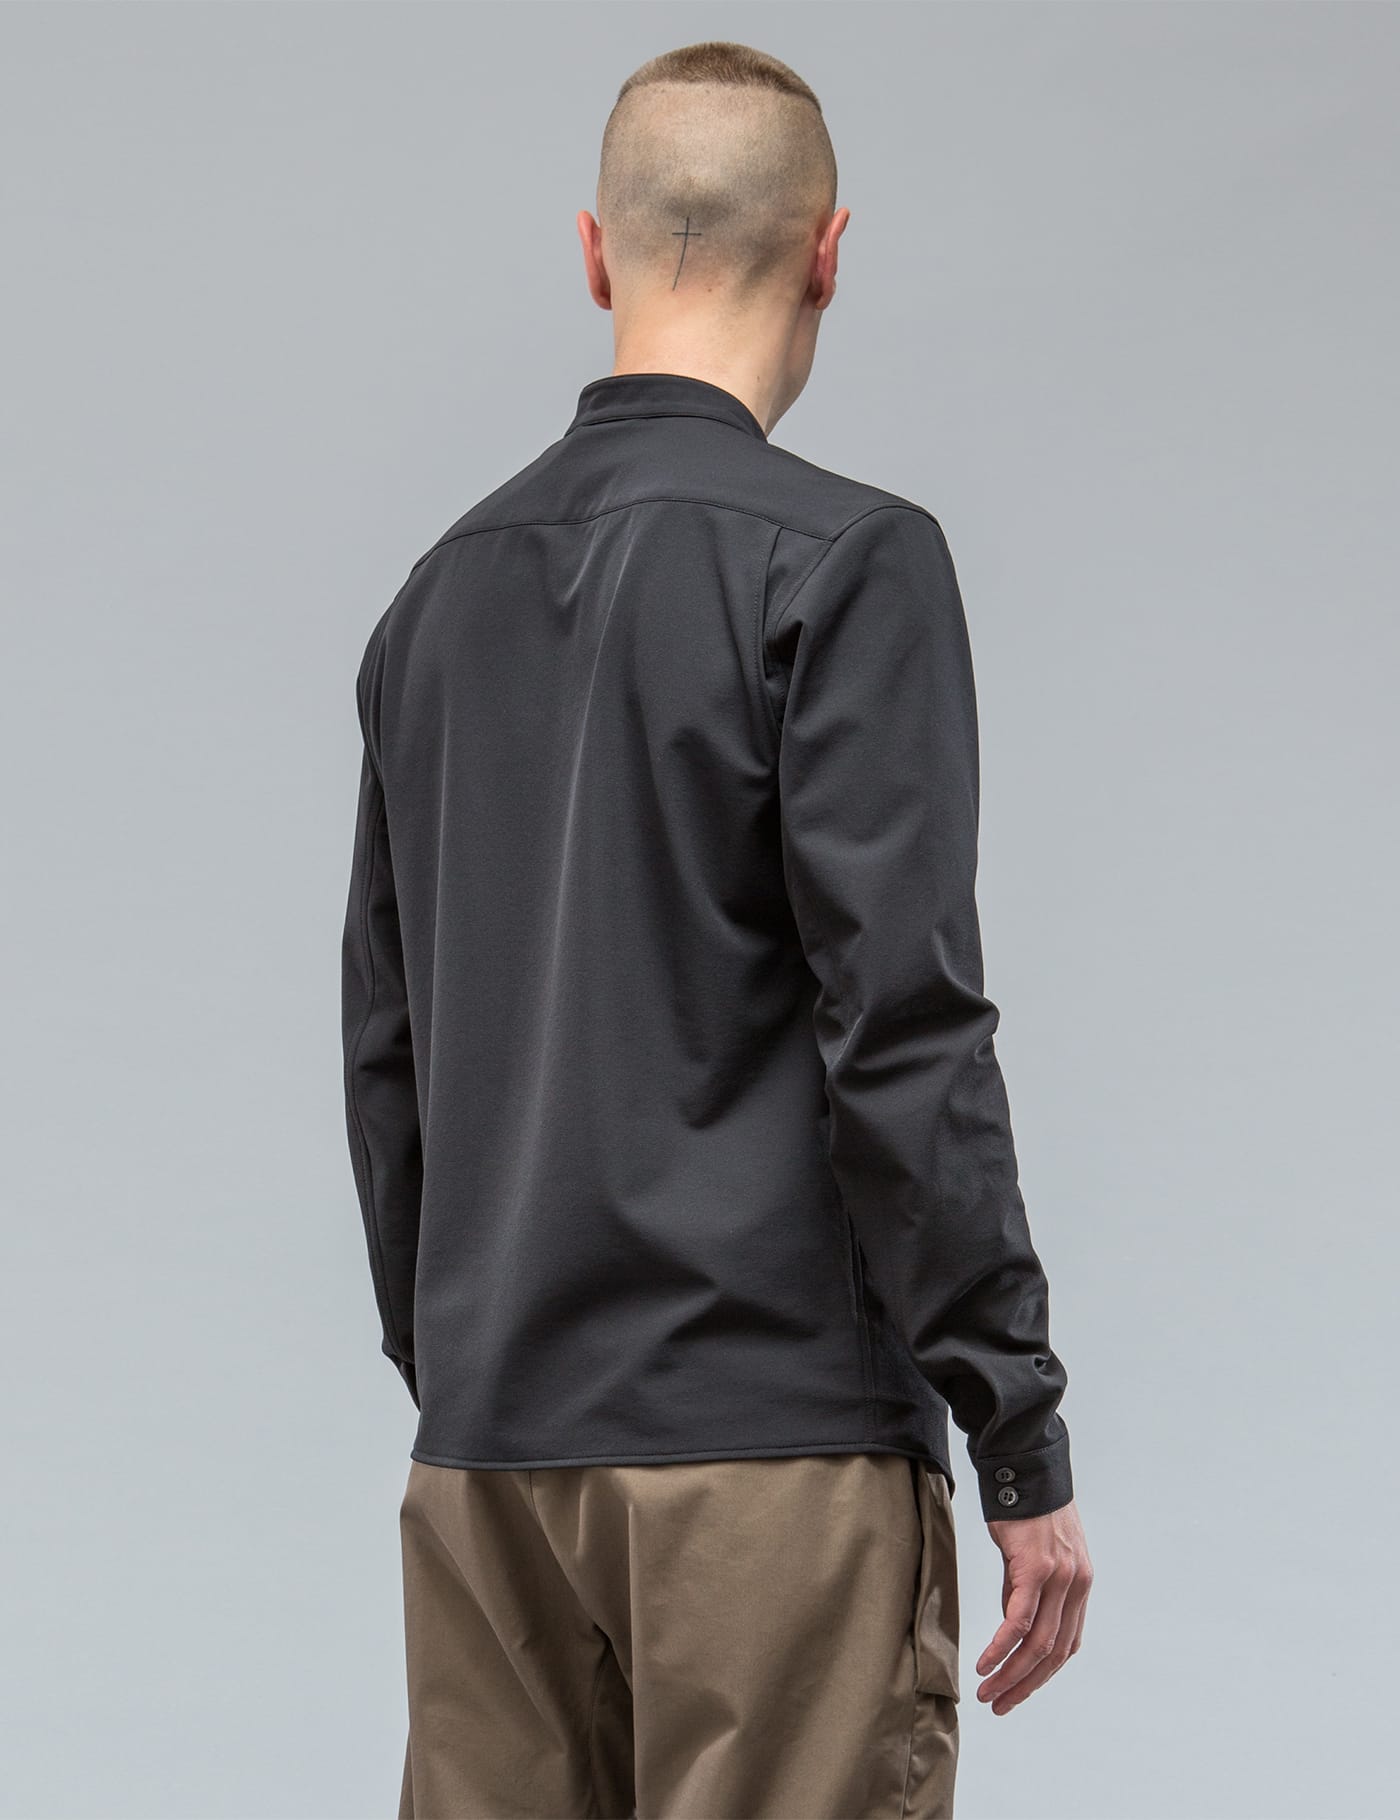 ACRONYM - LA6-DS HD Jersey Long Sleeve Zip Shirt | HBX - Globally 